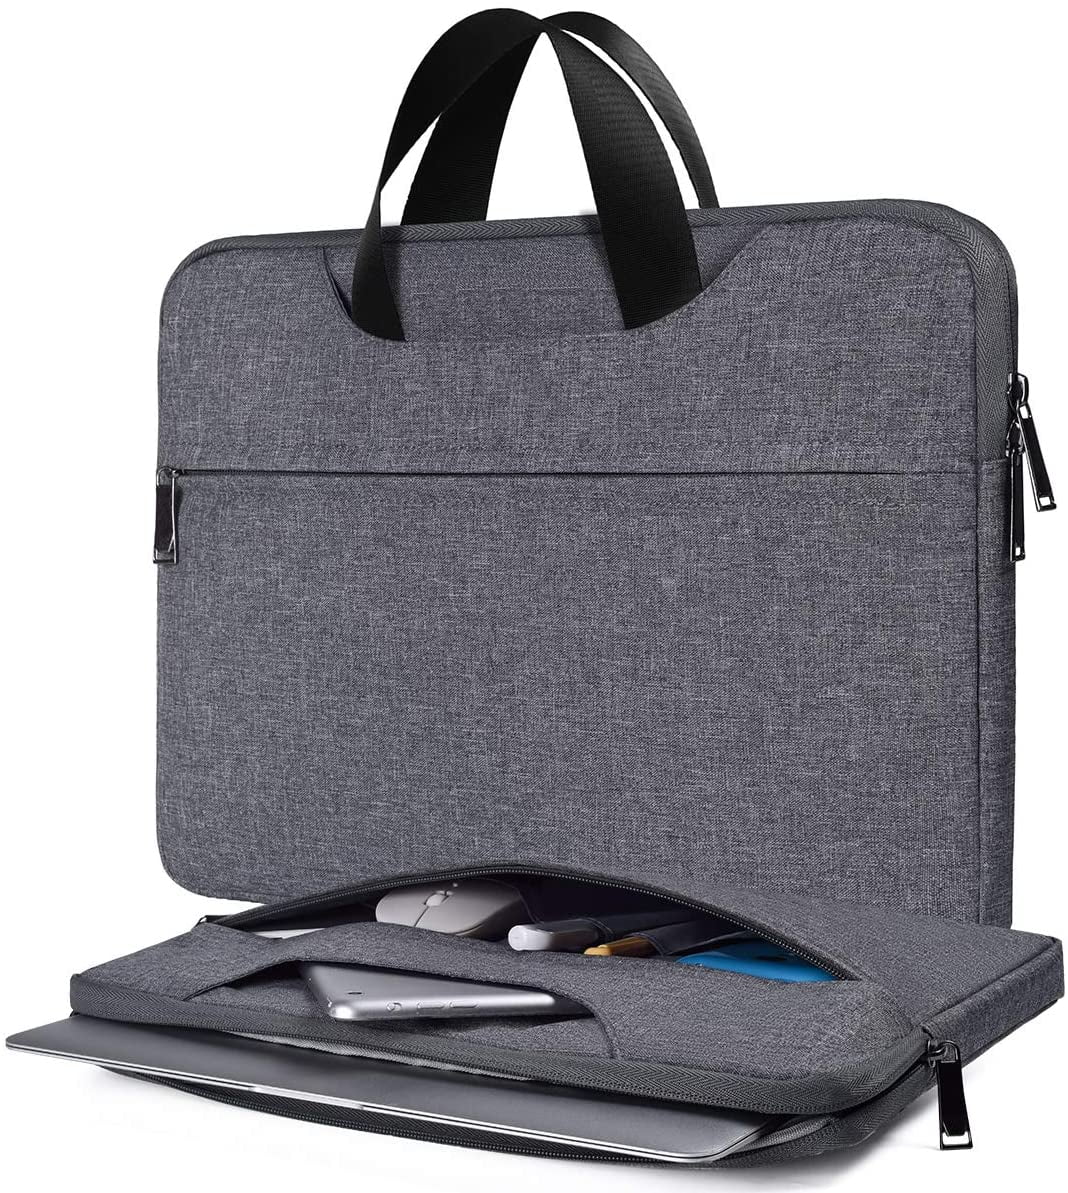 Acer Aspire E15 Gray HP Spectre x360 15.6 Men Women Travel Briefcase Laptop Sleeve with Organizer for Dell Inspiron 15 5000 Lenovo Ideapad 330 15.6 Case 15.6 Inch Laptop Bag ASUS Chromebook 15.6 